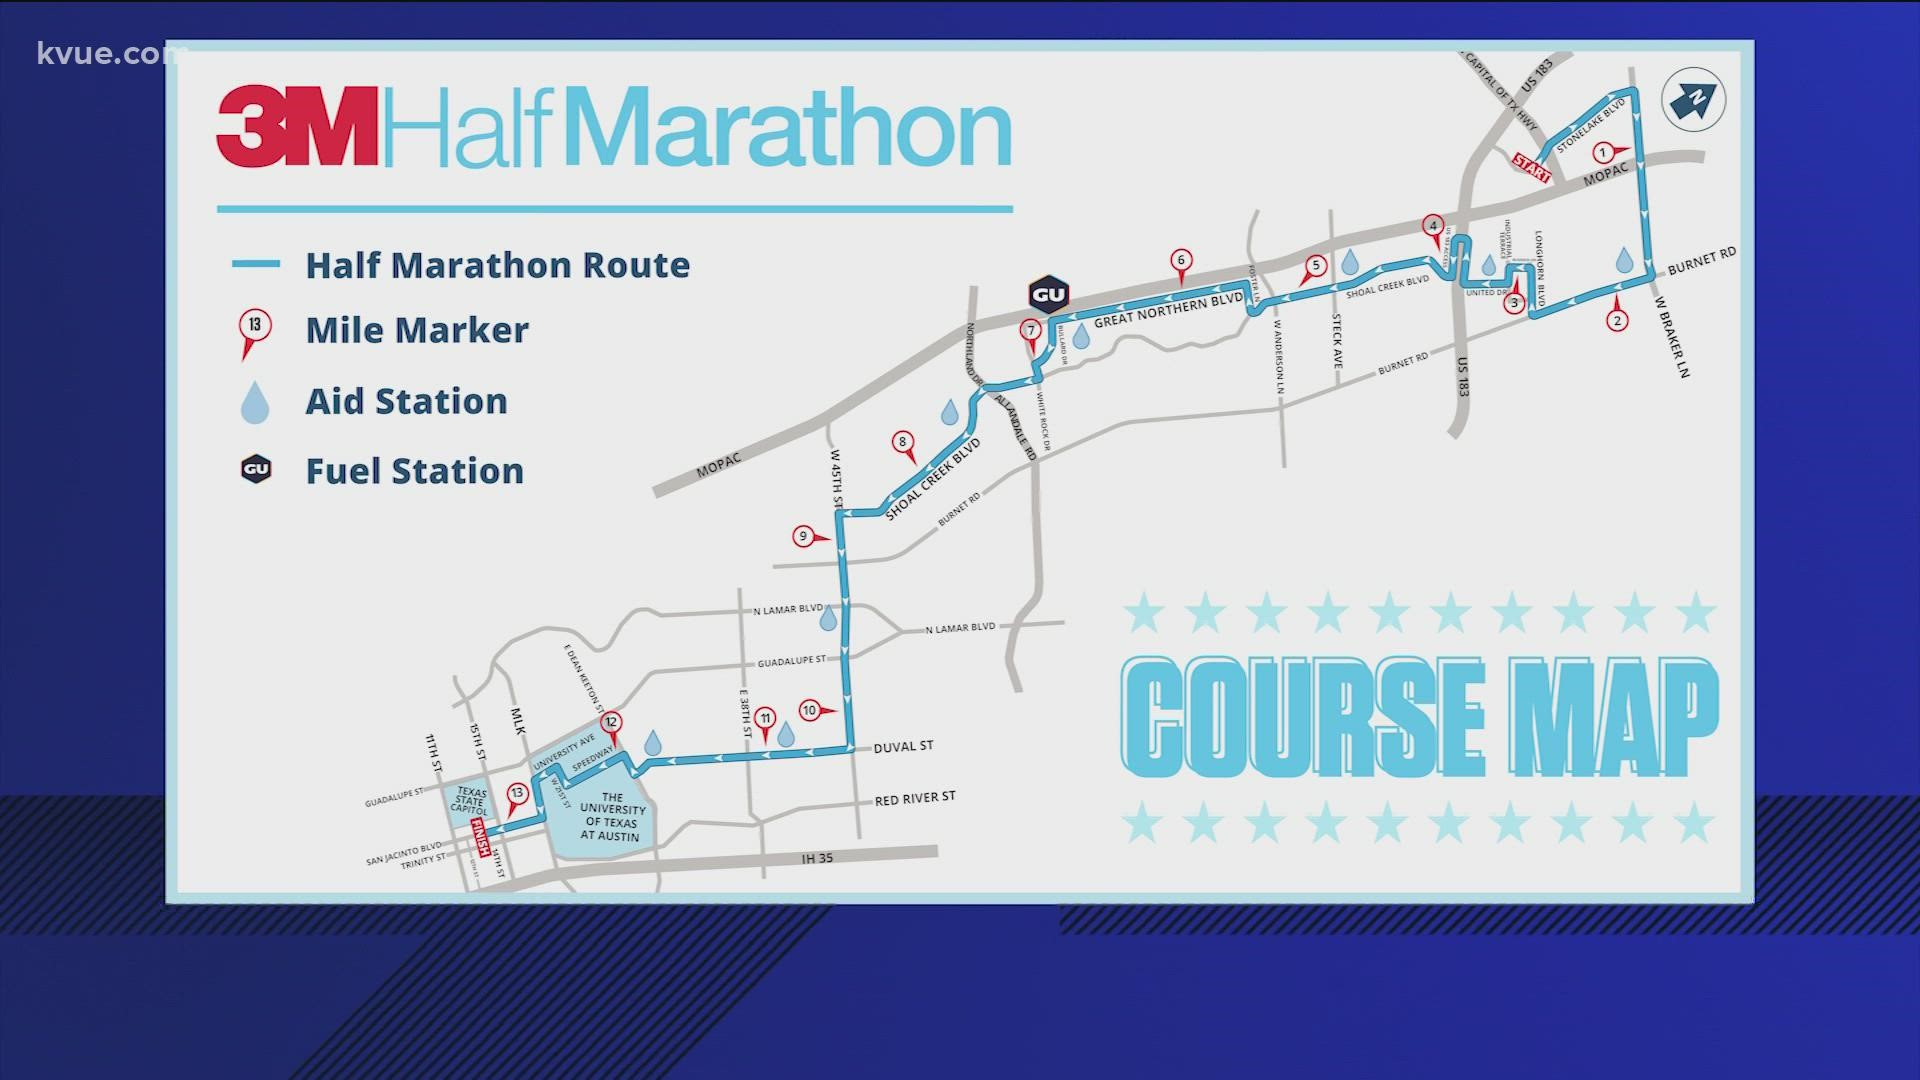 3M Half Marathon is back in Austin on Jan. 23, 2022 | kvue.com